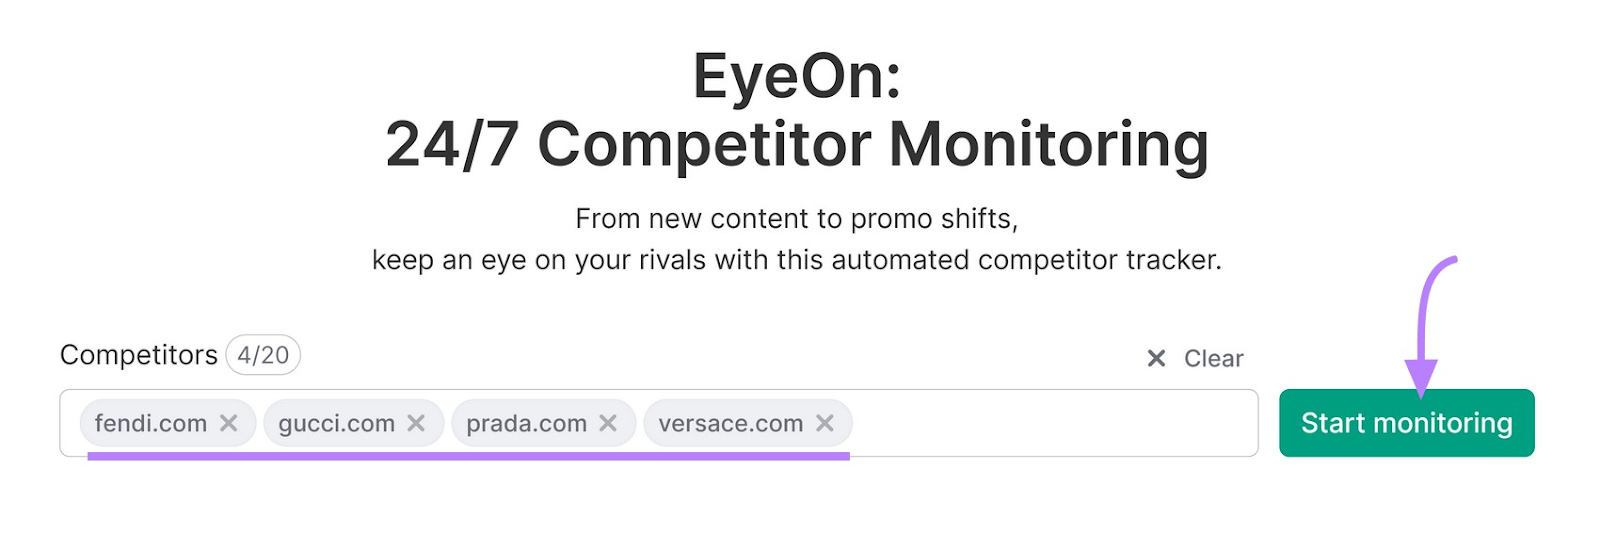 EyeOn (24/7 Competitor Monitoring) tool